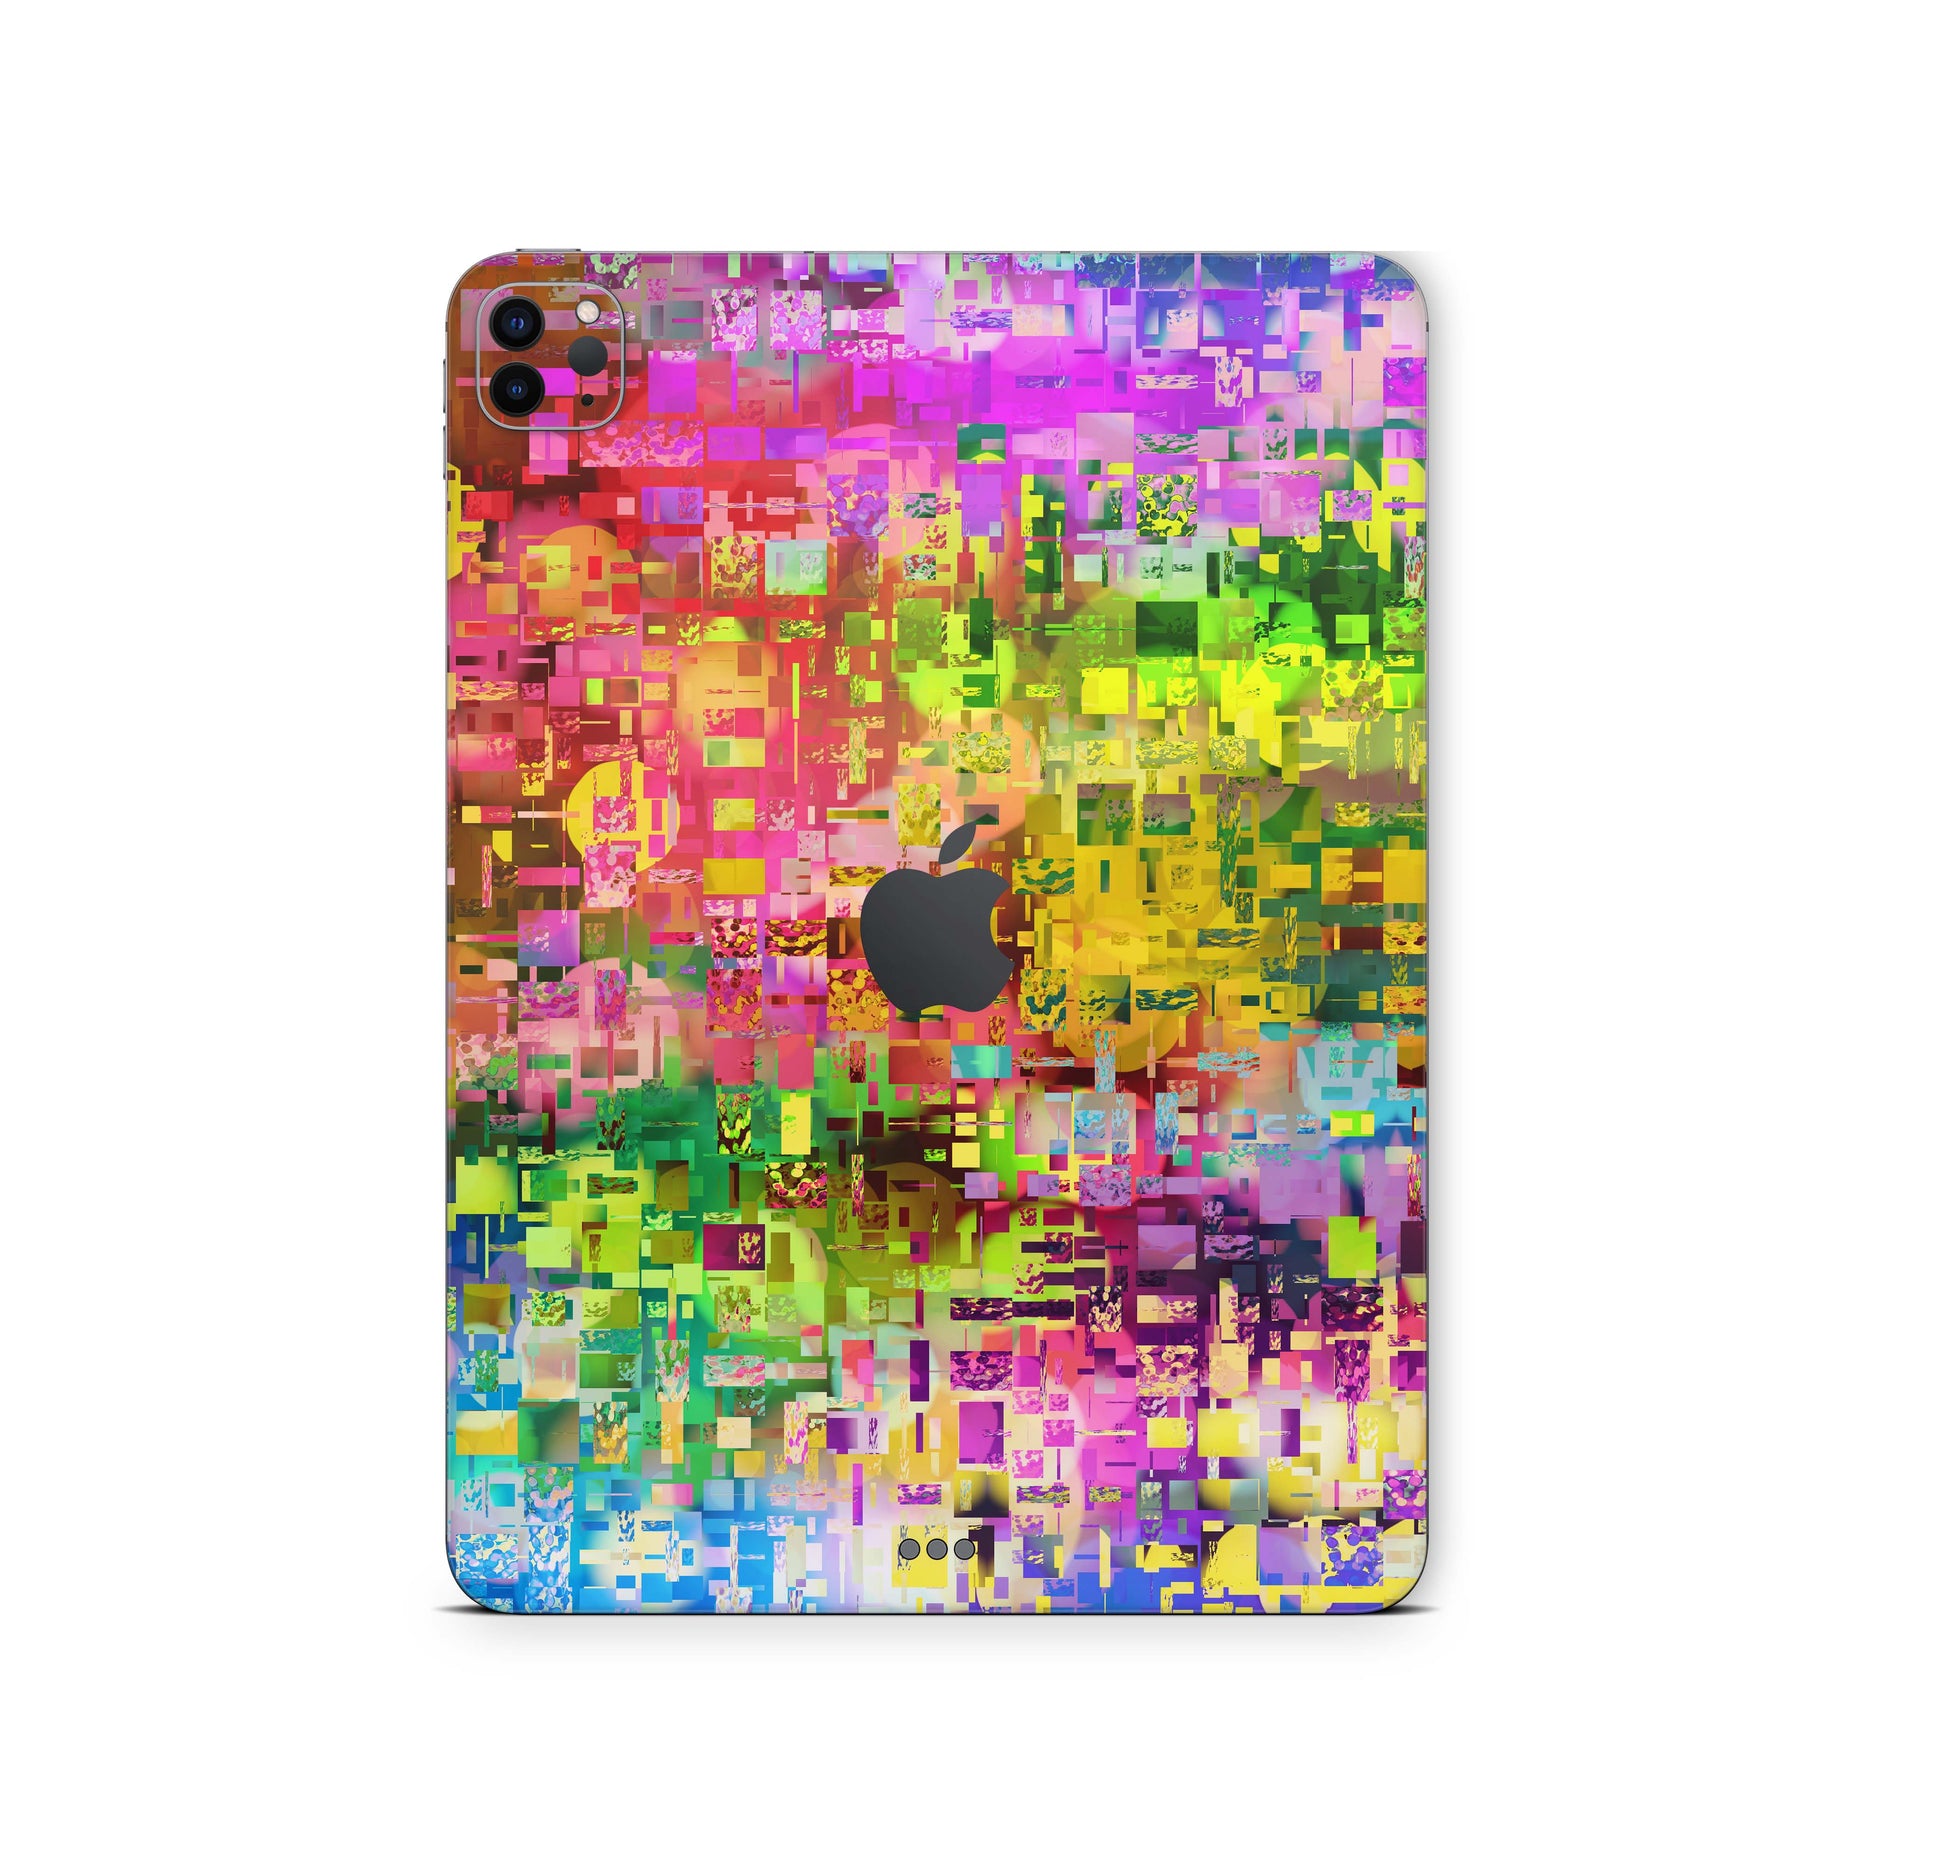 iPad Pro Skin 11" 3.Generation M1 2021 Design Cover Folie Vinyl Skins & Wraps Aufkleber Skins4u Abstract  